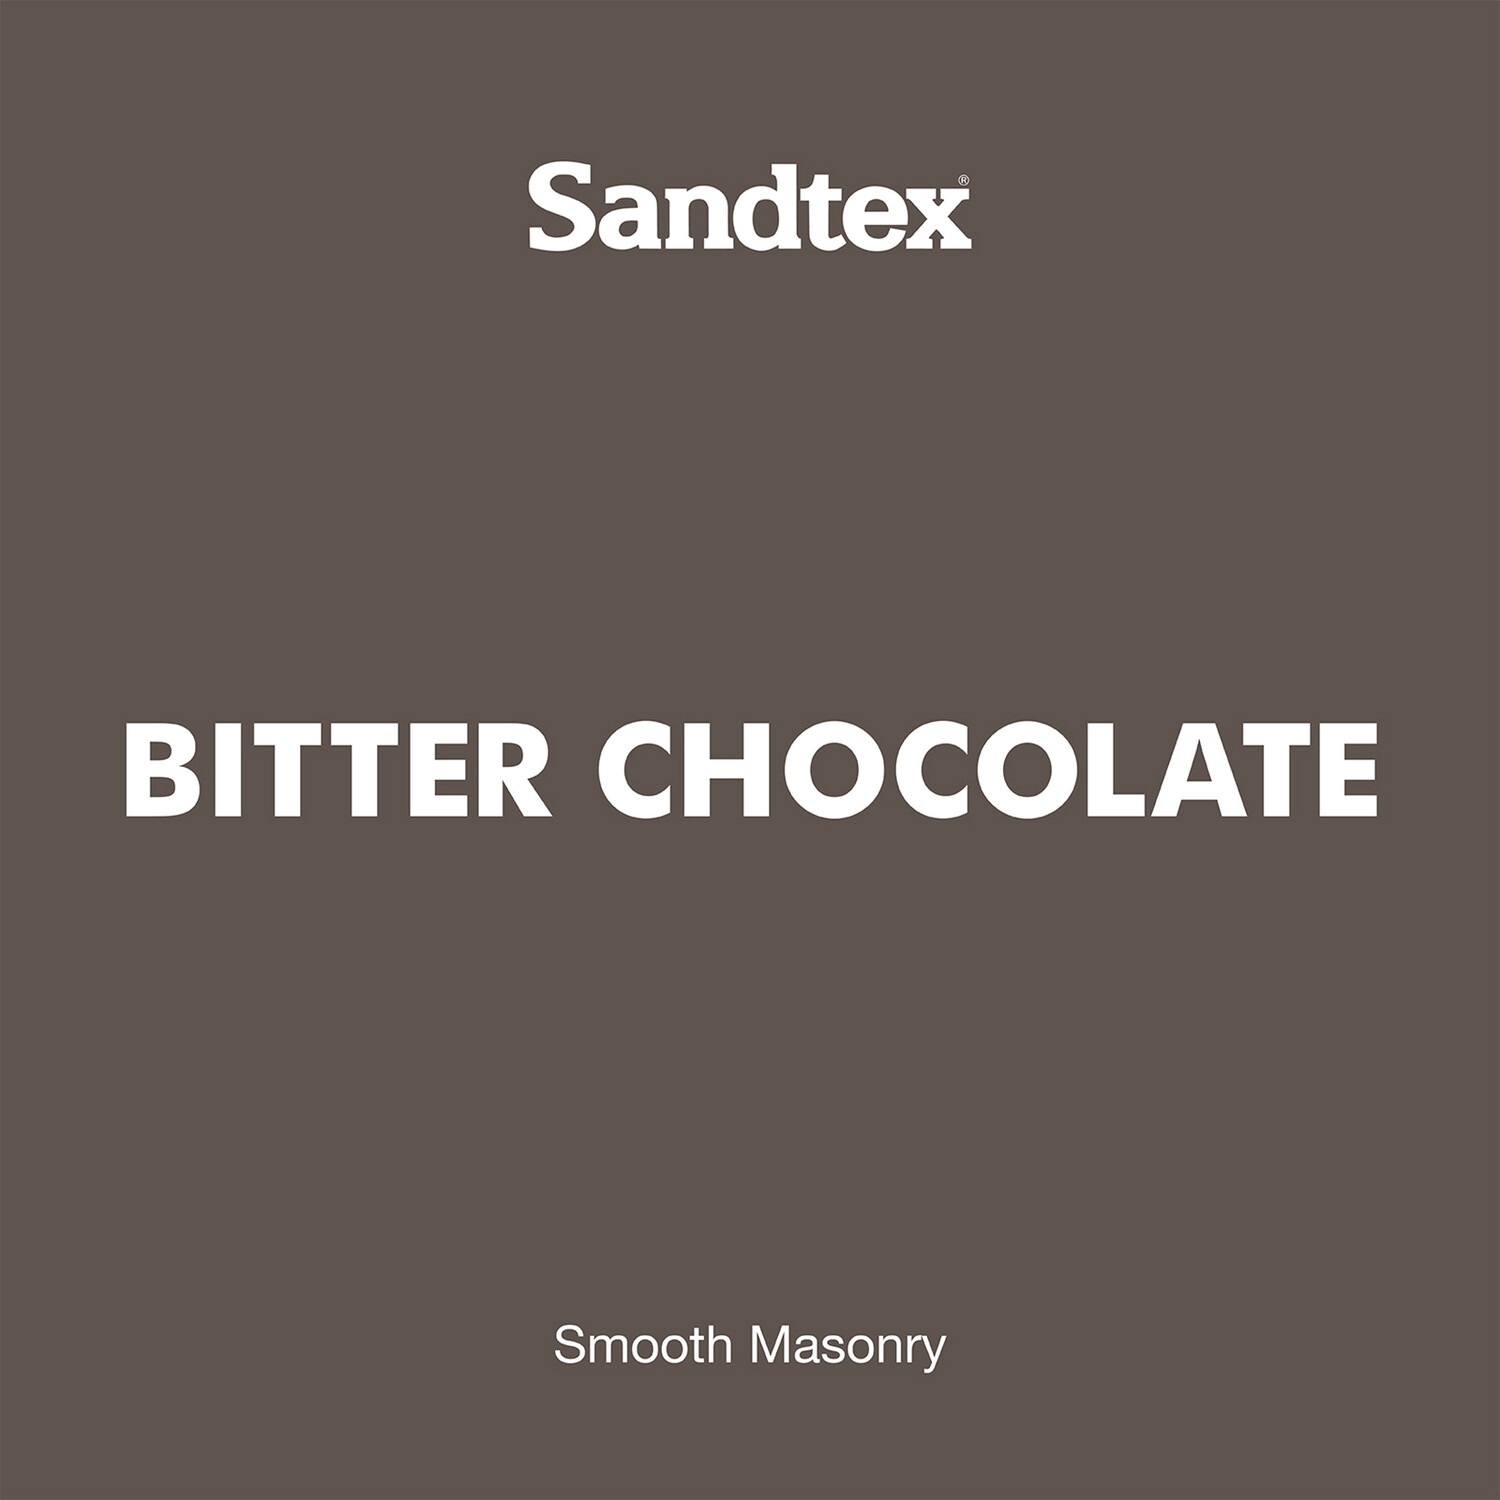 Sandtex Walls Bitter Chocolate Microseal Matt Smooth Masonry Paint 2.5L Image 4